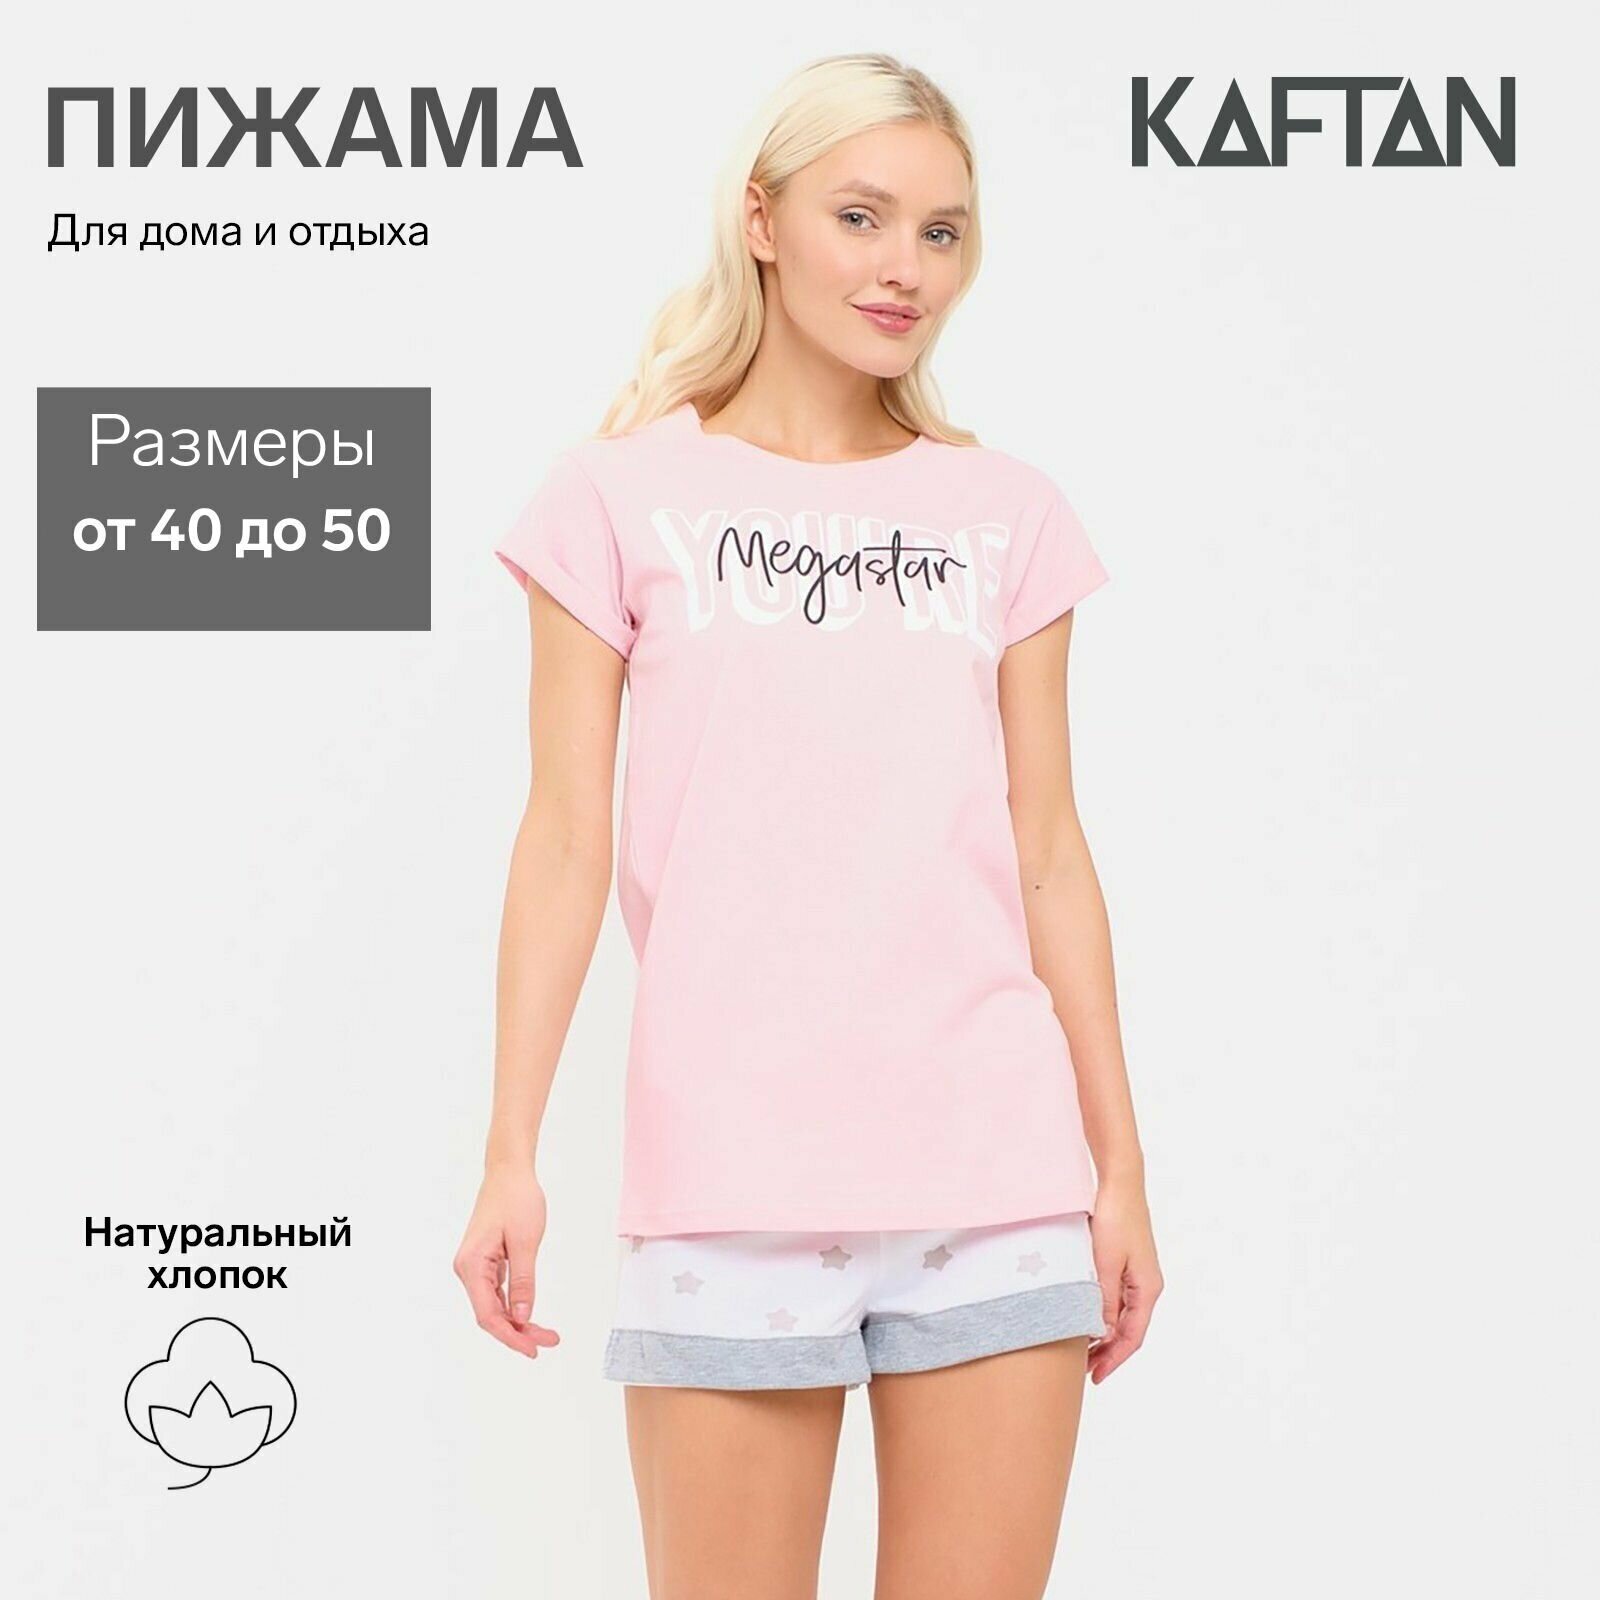 Пижама Kaftan, шорты, футболка, короткий рукав, размер 44-46, розовый - фотография № 1